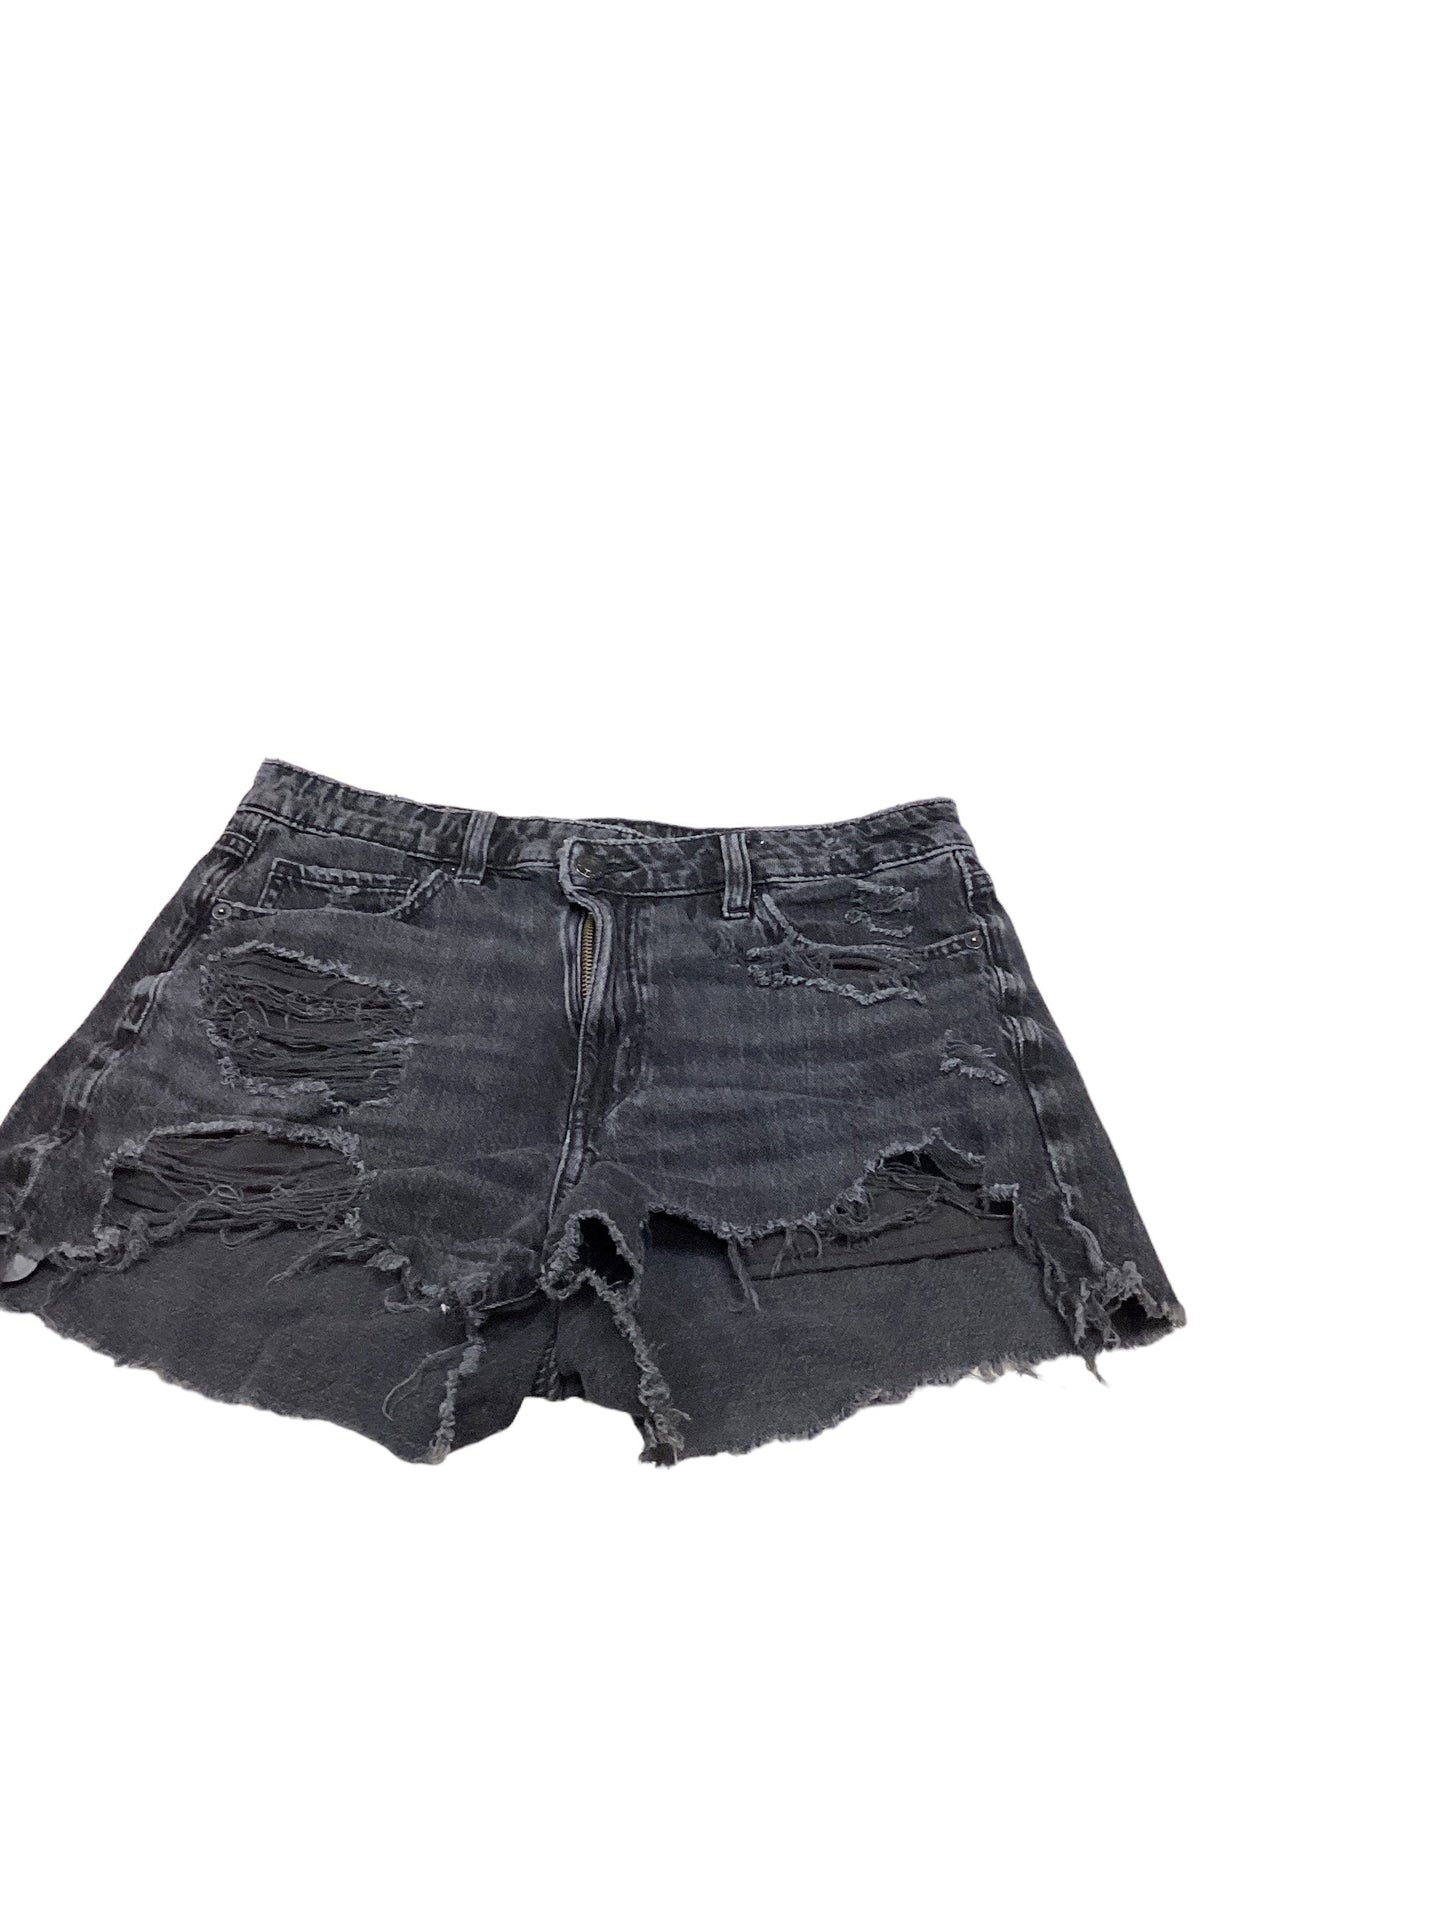 Black Shorts American Eagle, Size 8